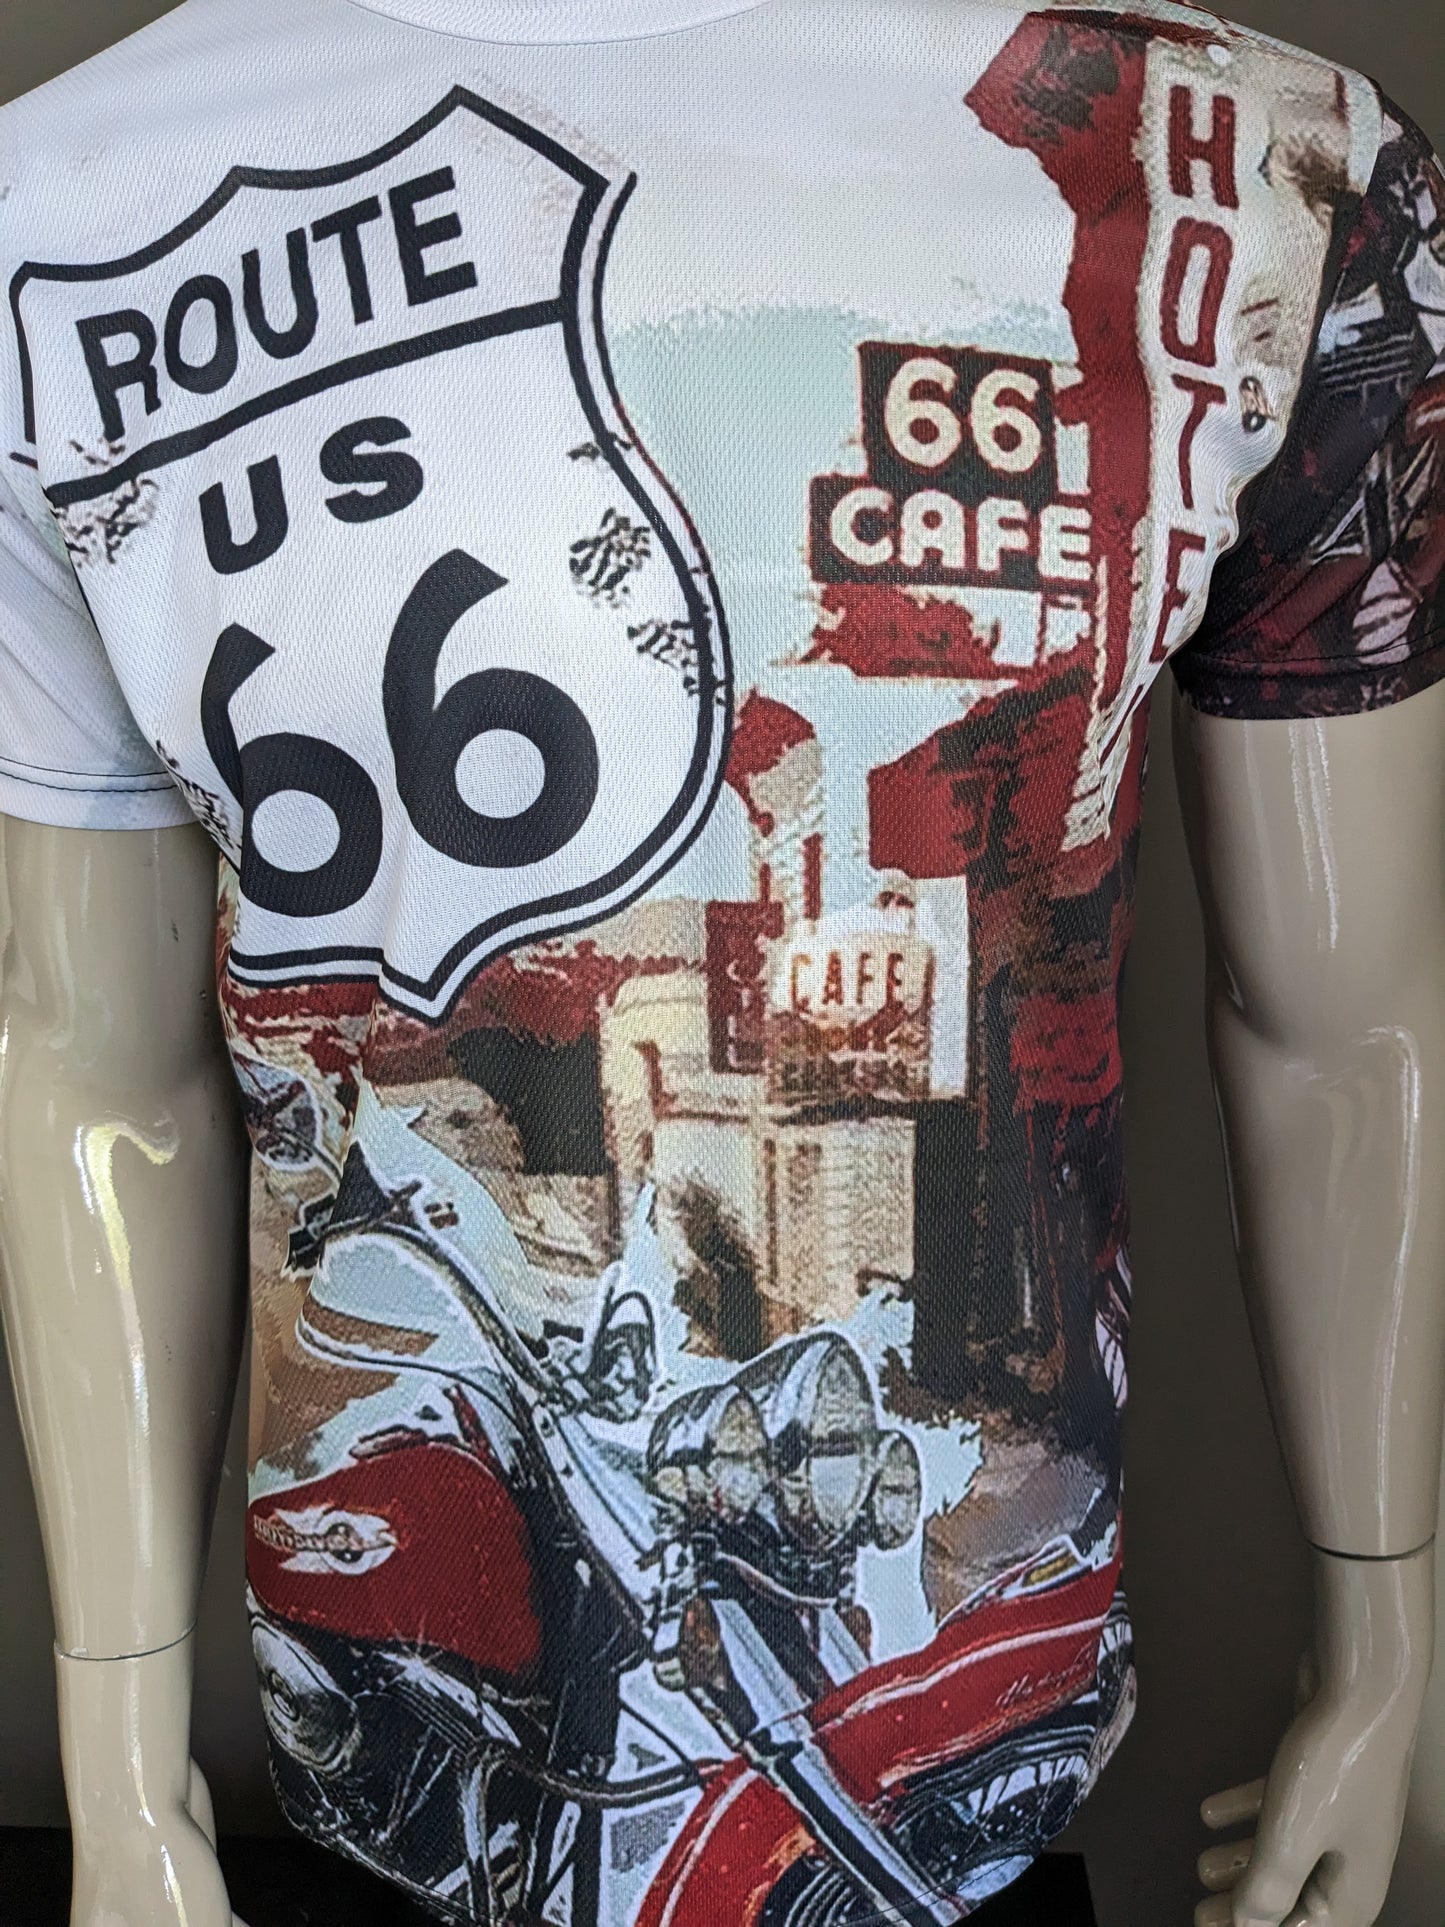 Route 66 shirt. Wit Rood Zwart gekleurd. Maat M.